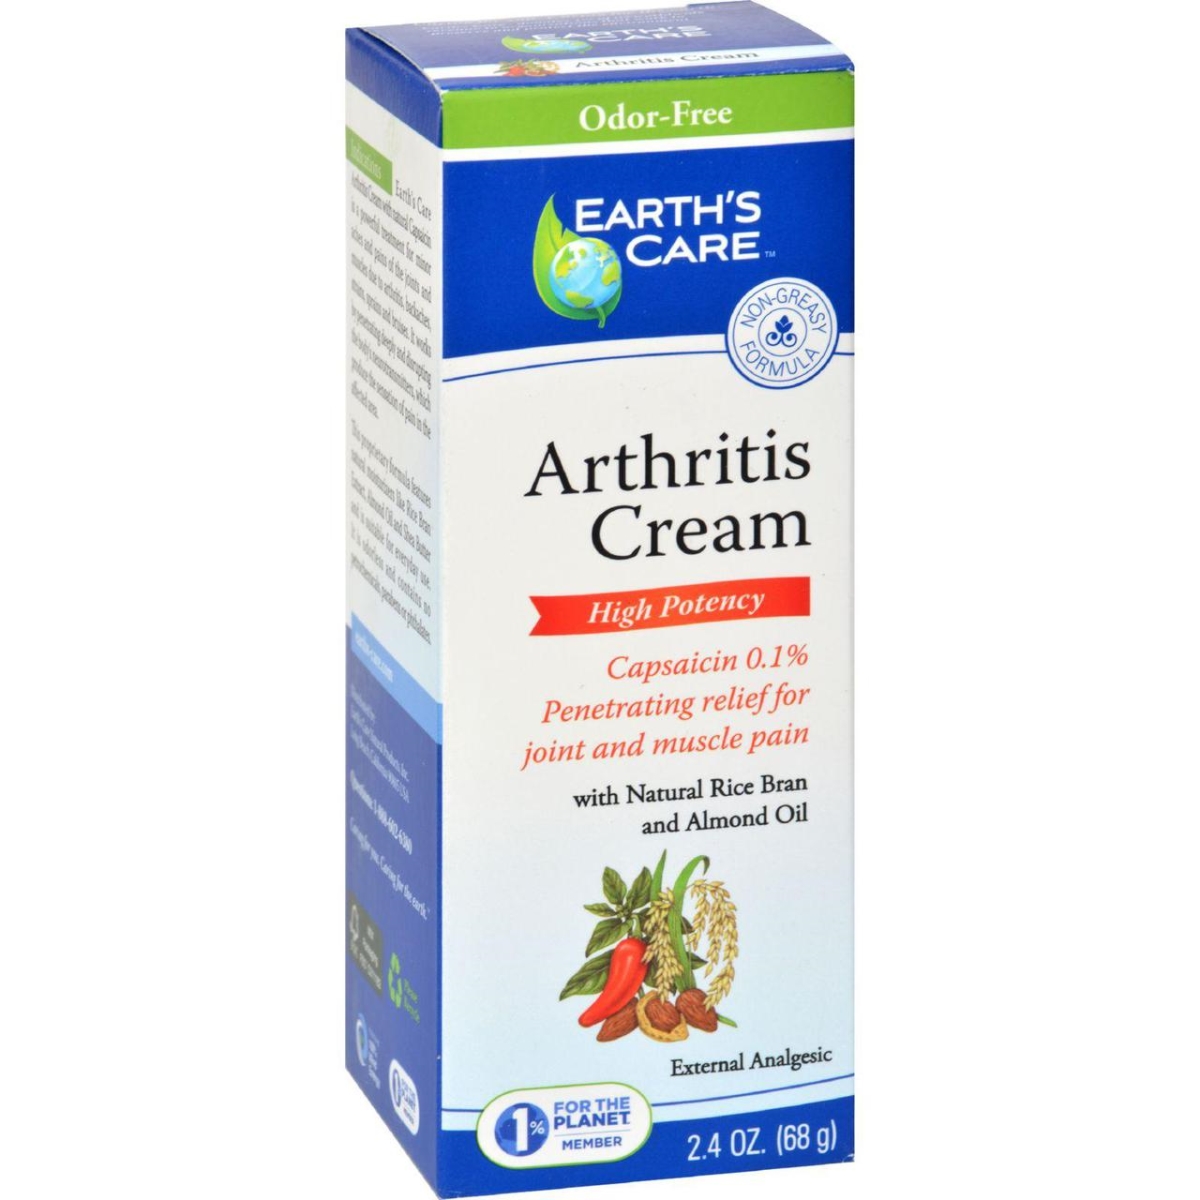 Hg1216274 2.4 Oz Arthritis Cream